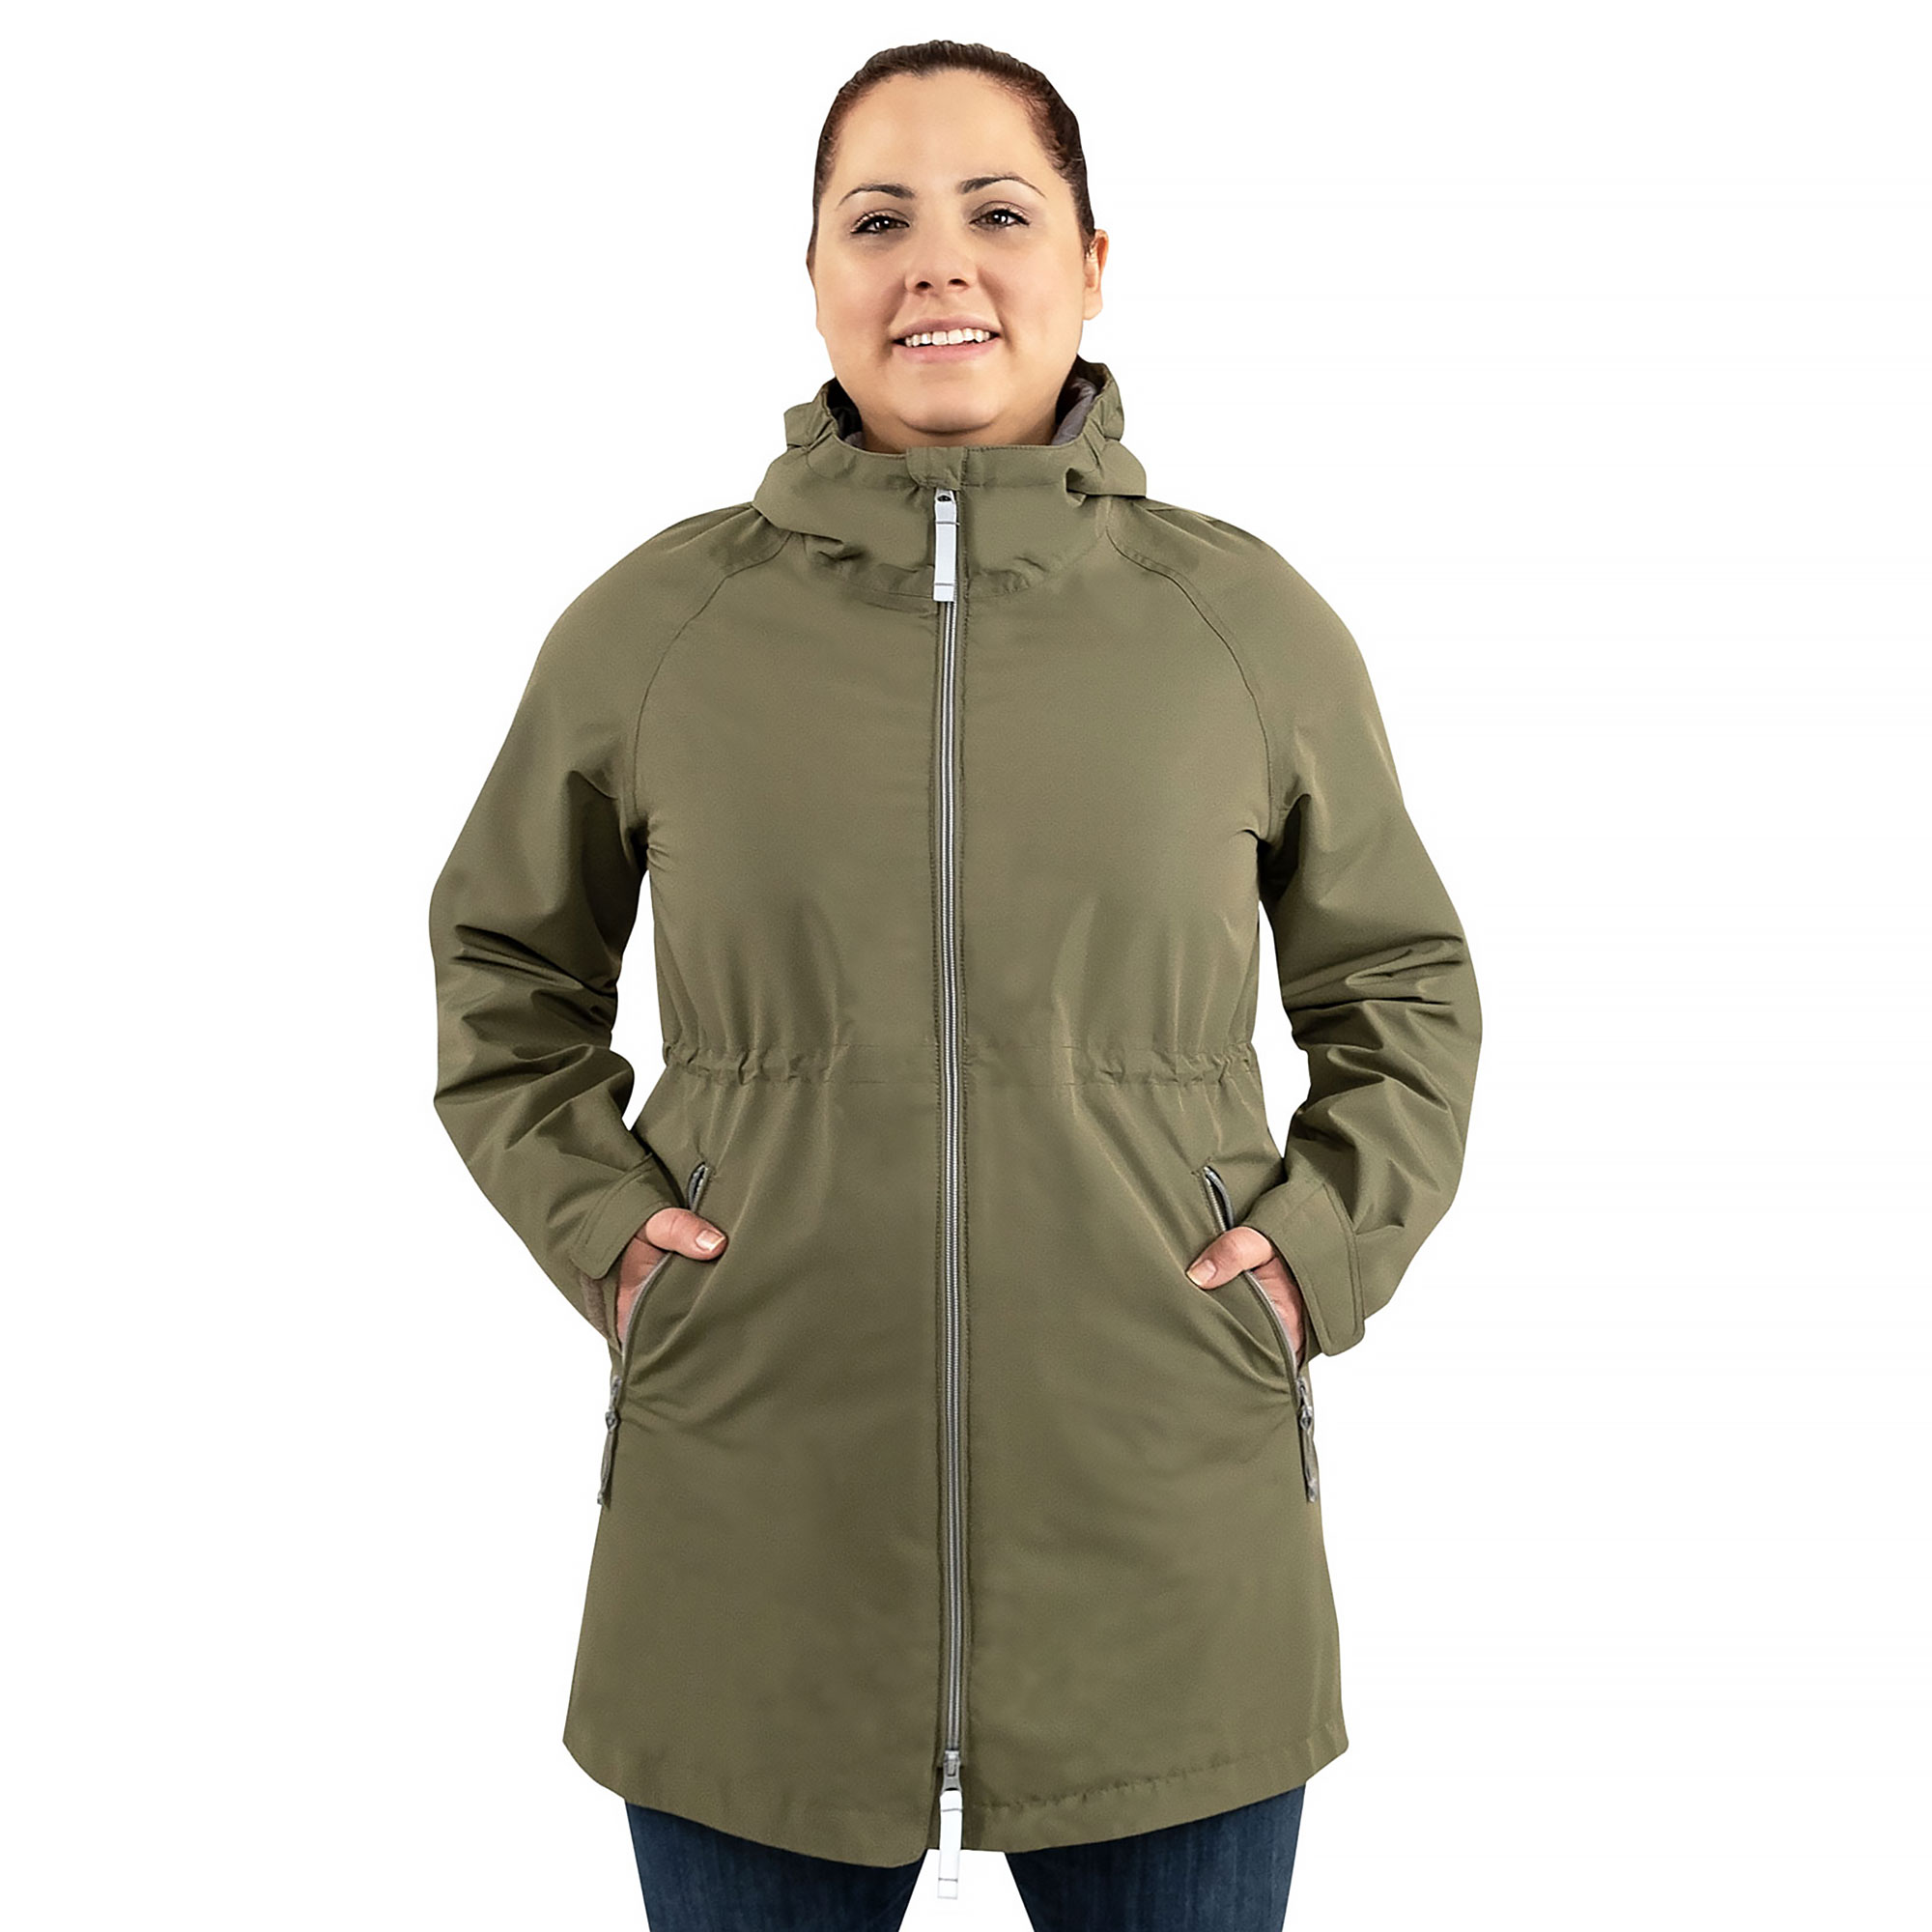 Womens Adjustable Rain Jackets, Army Green Raincoat